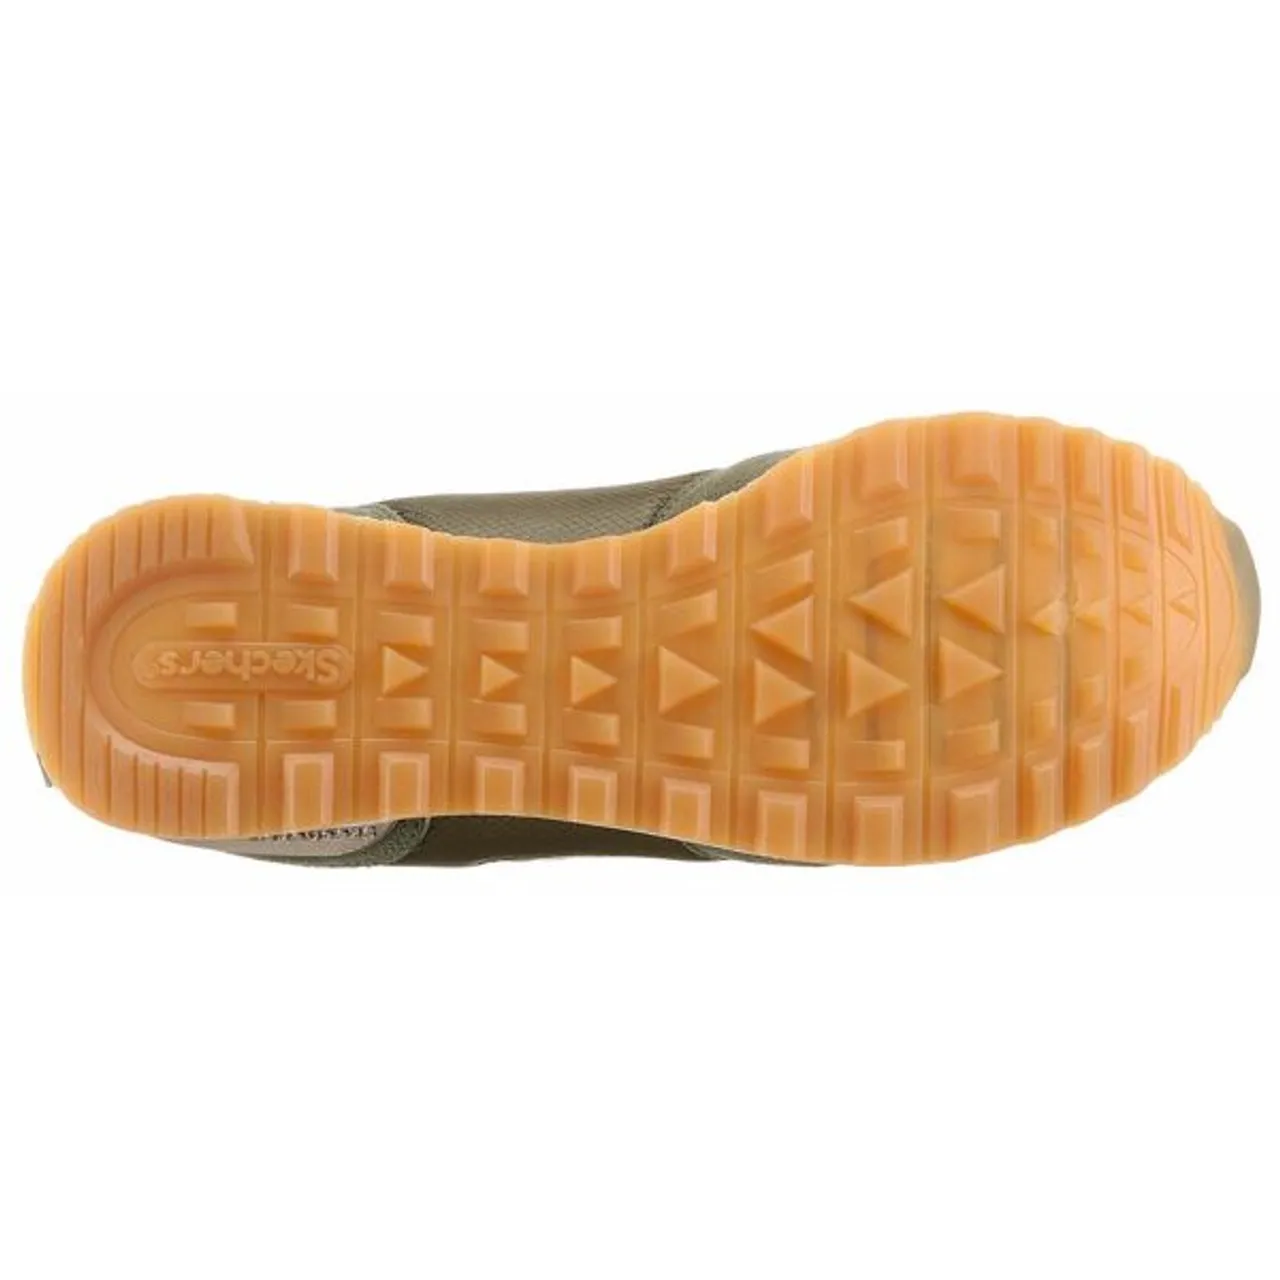 Sneaker SKECHERS "OG 85 - GOLDN GURL" Gr. 35, grün (olivgrün) Damen Schuhe Sneaker low Modernsneaker Freizeitschuh, Halbschuh, Schnürschuh mit Air-Coo...